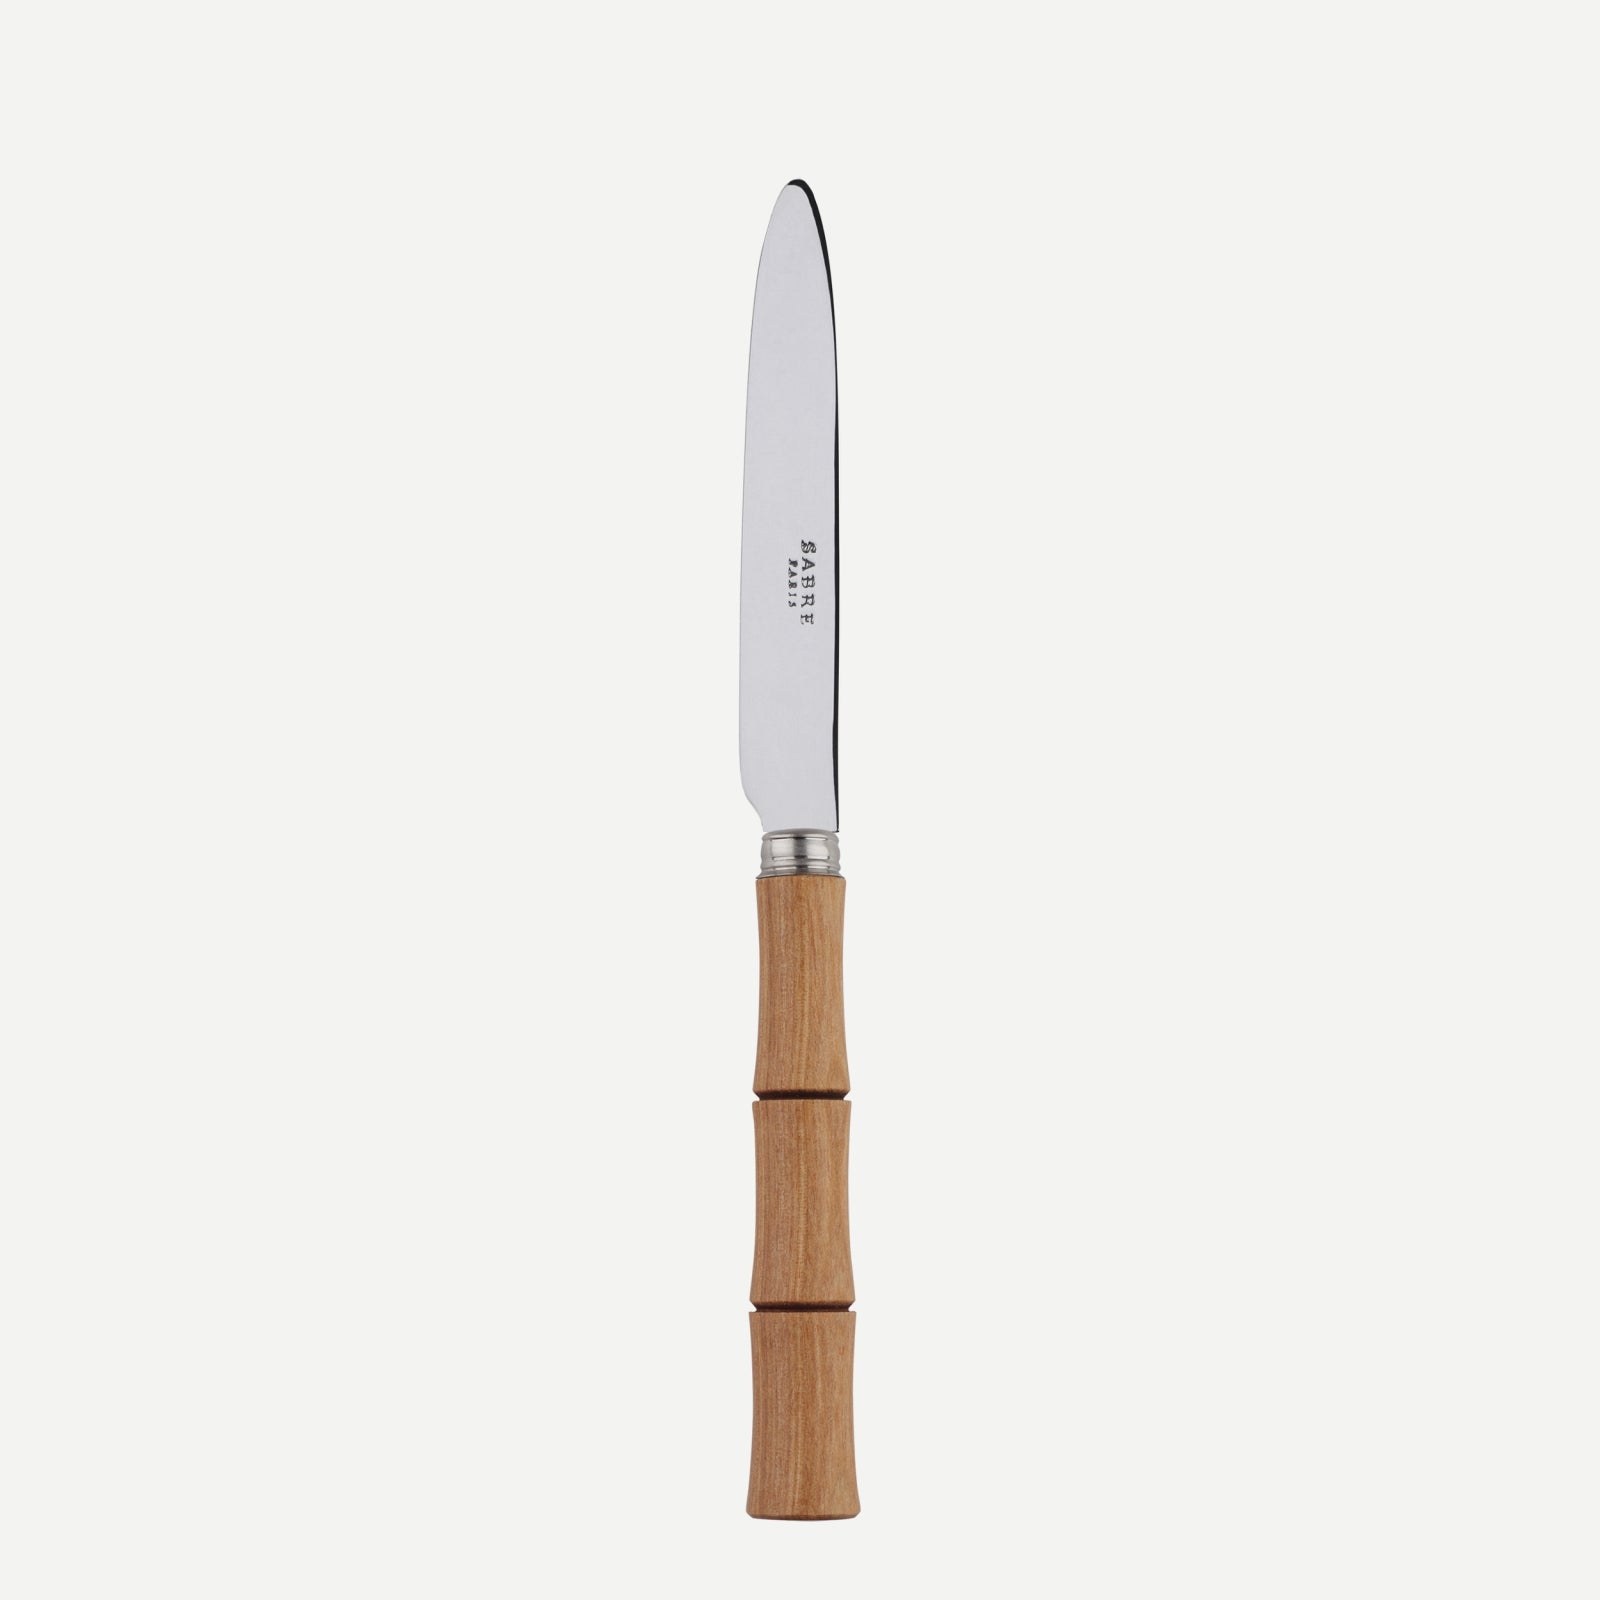 Cake knife - Bamboo - Light press wood